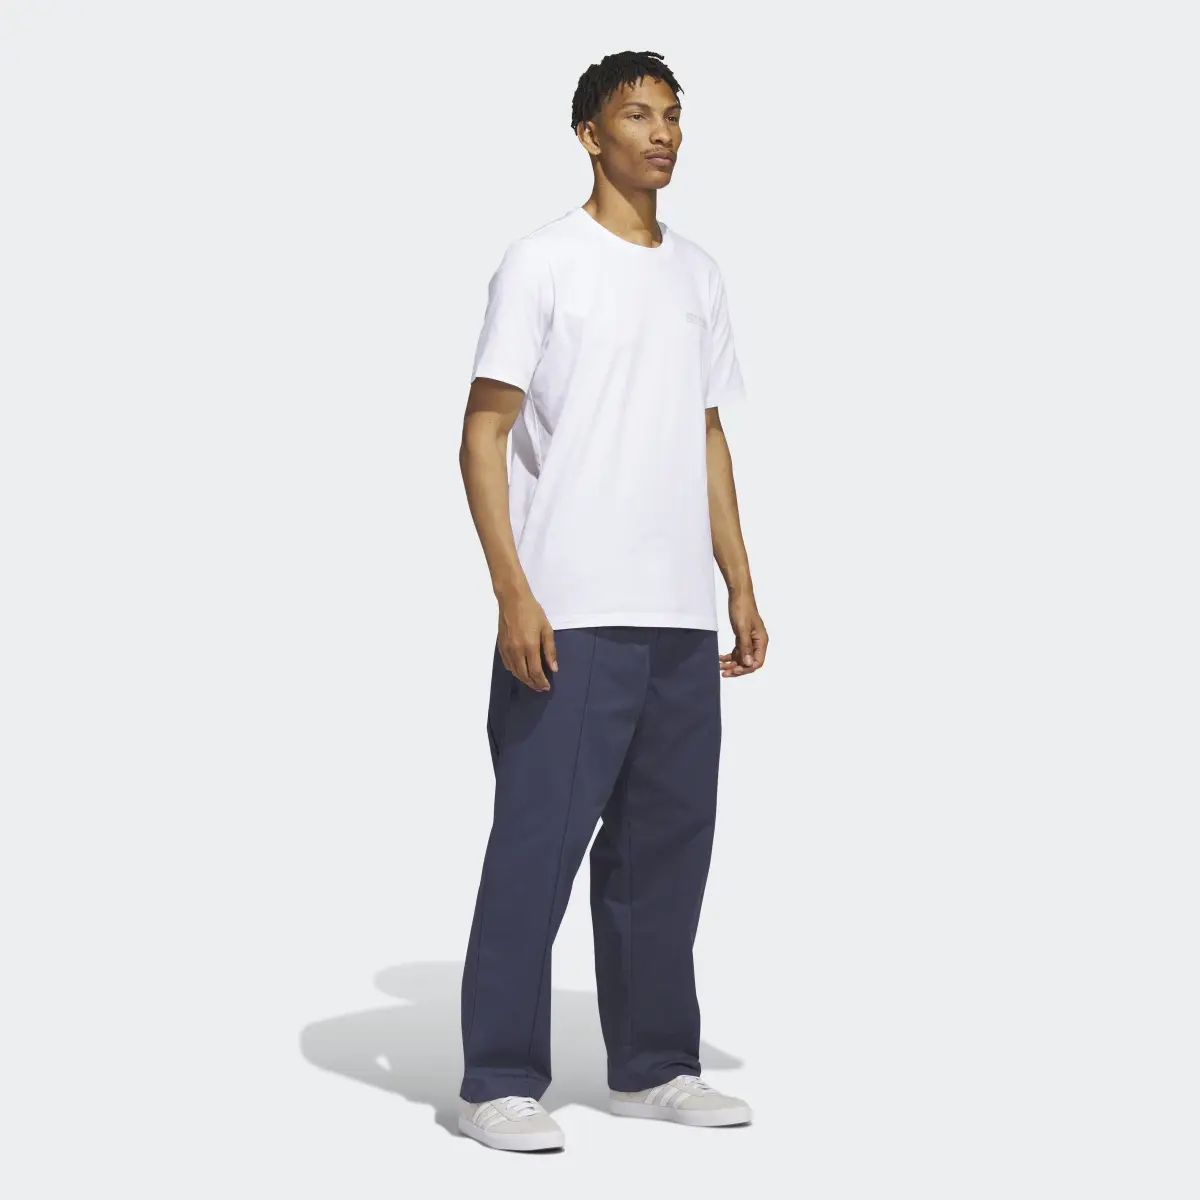 Adidas Pintuck Pants (Gender Neutral) - HR9847